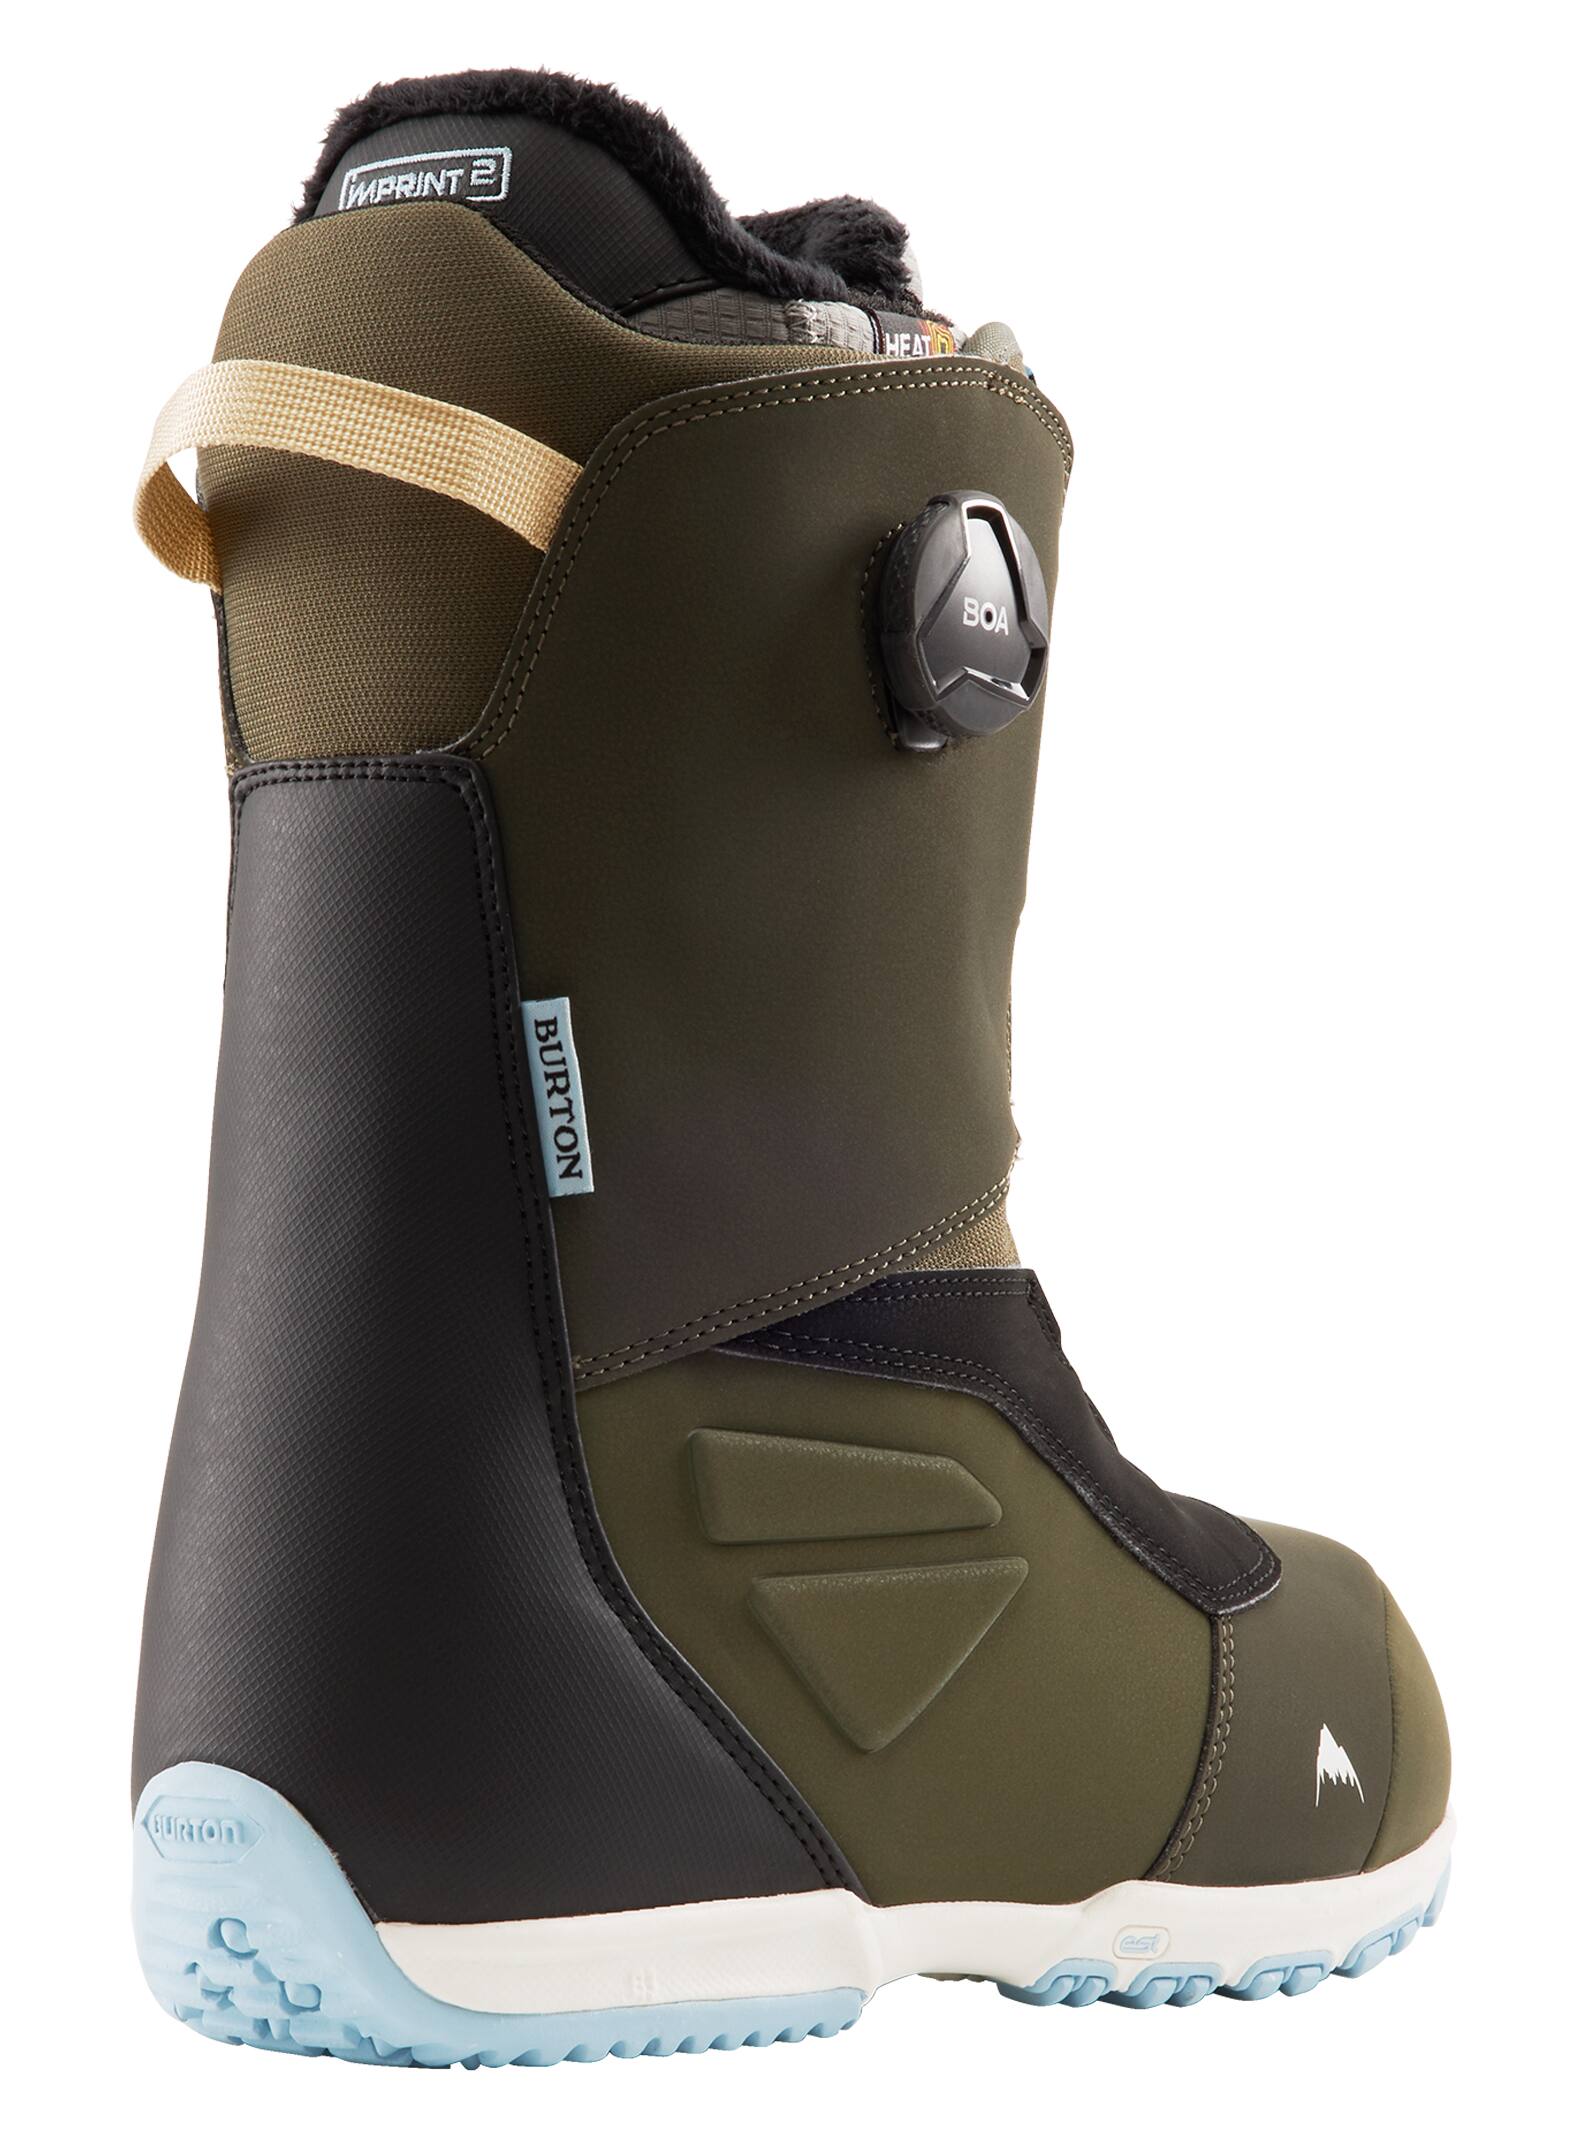 Men's Burton Ruler BOA® Snowboard Boots - Wide | Burton.com Winter 